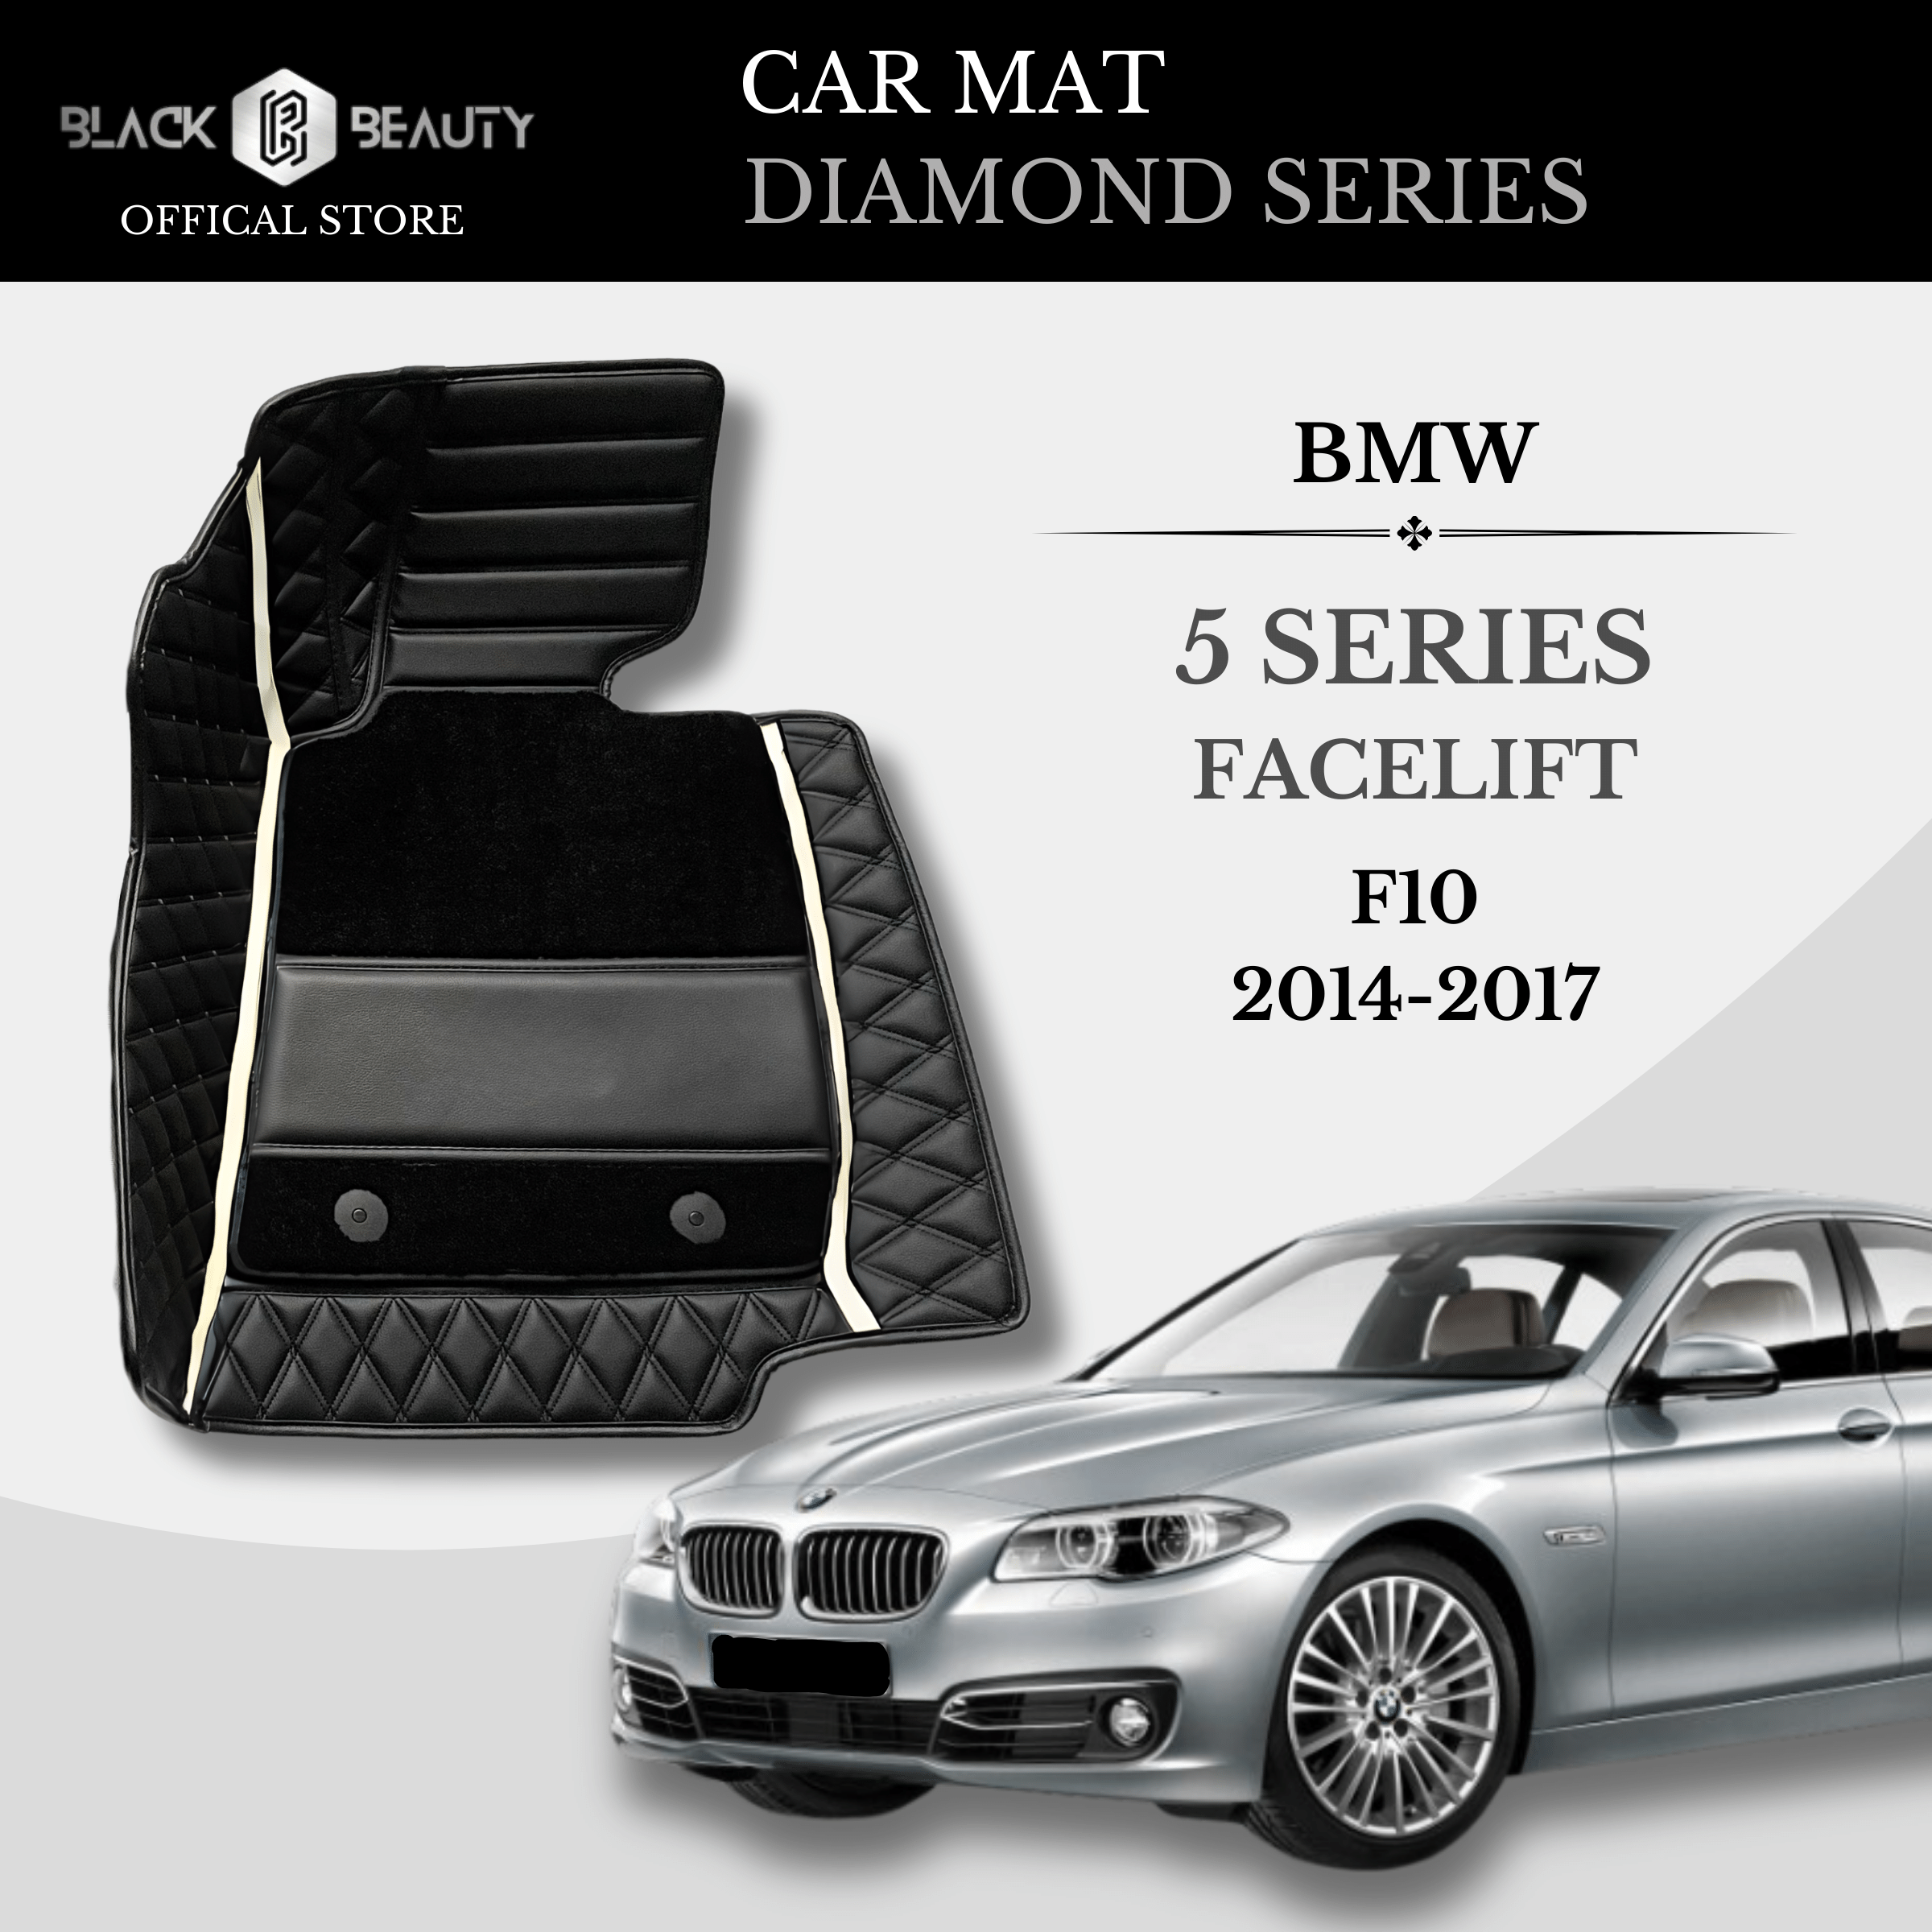 BMW 5 Series Facelift F10 (2014-2017) - Diamond Series Car Mat